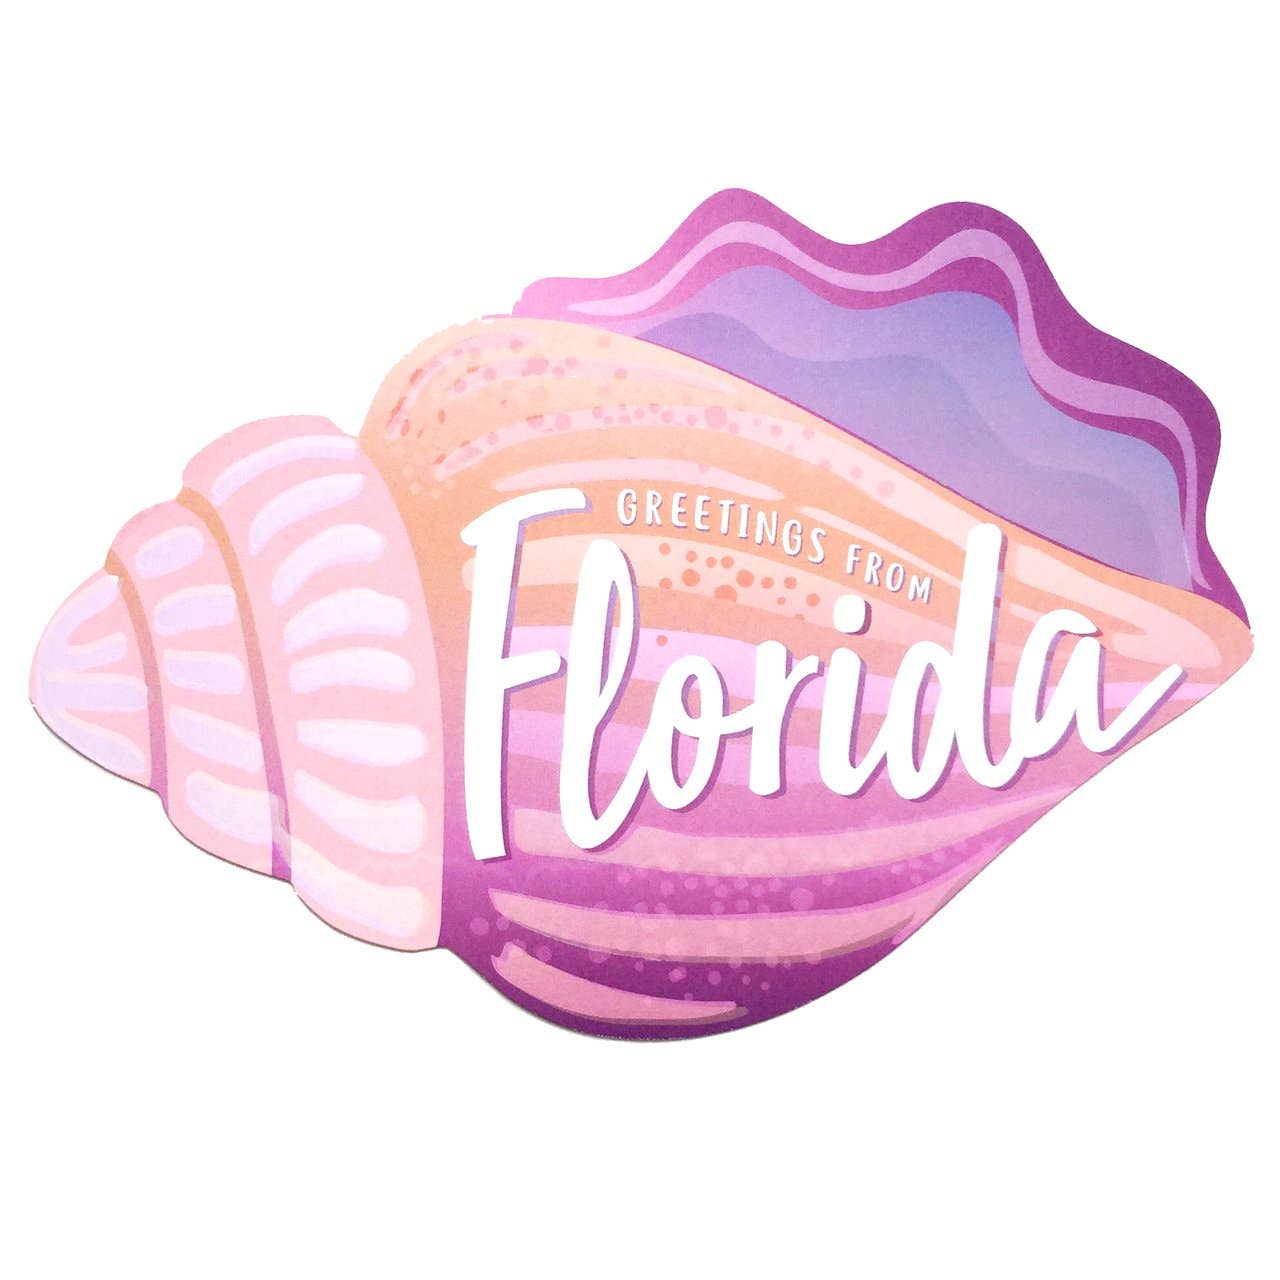 Florida Shell Die Cut Greeting Card - Spiral Circle